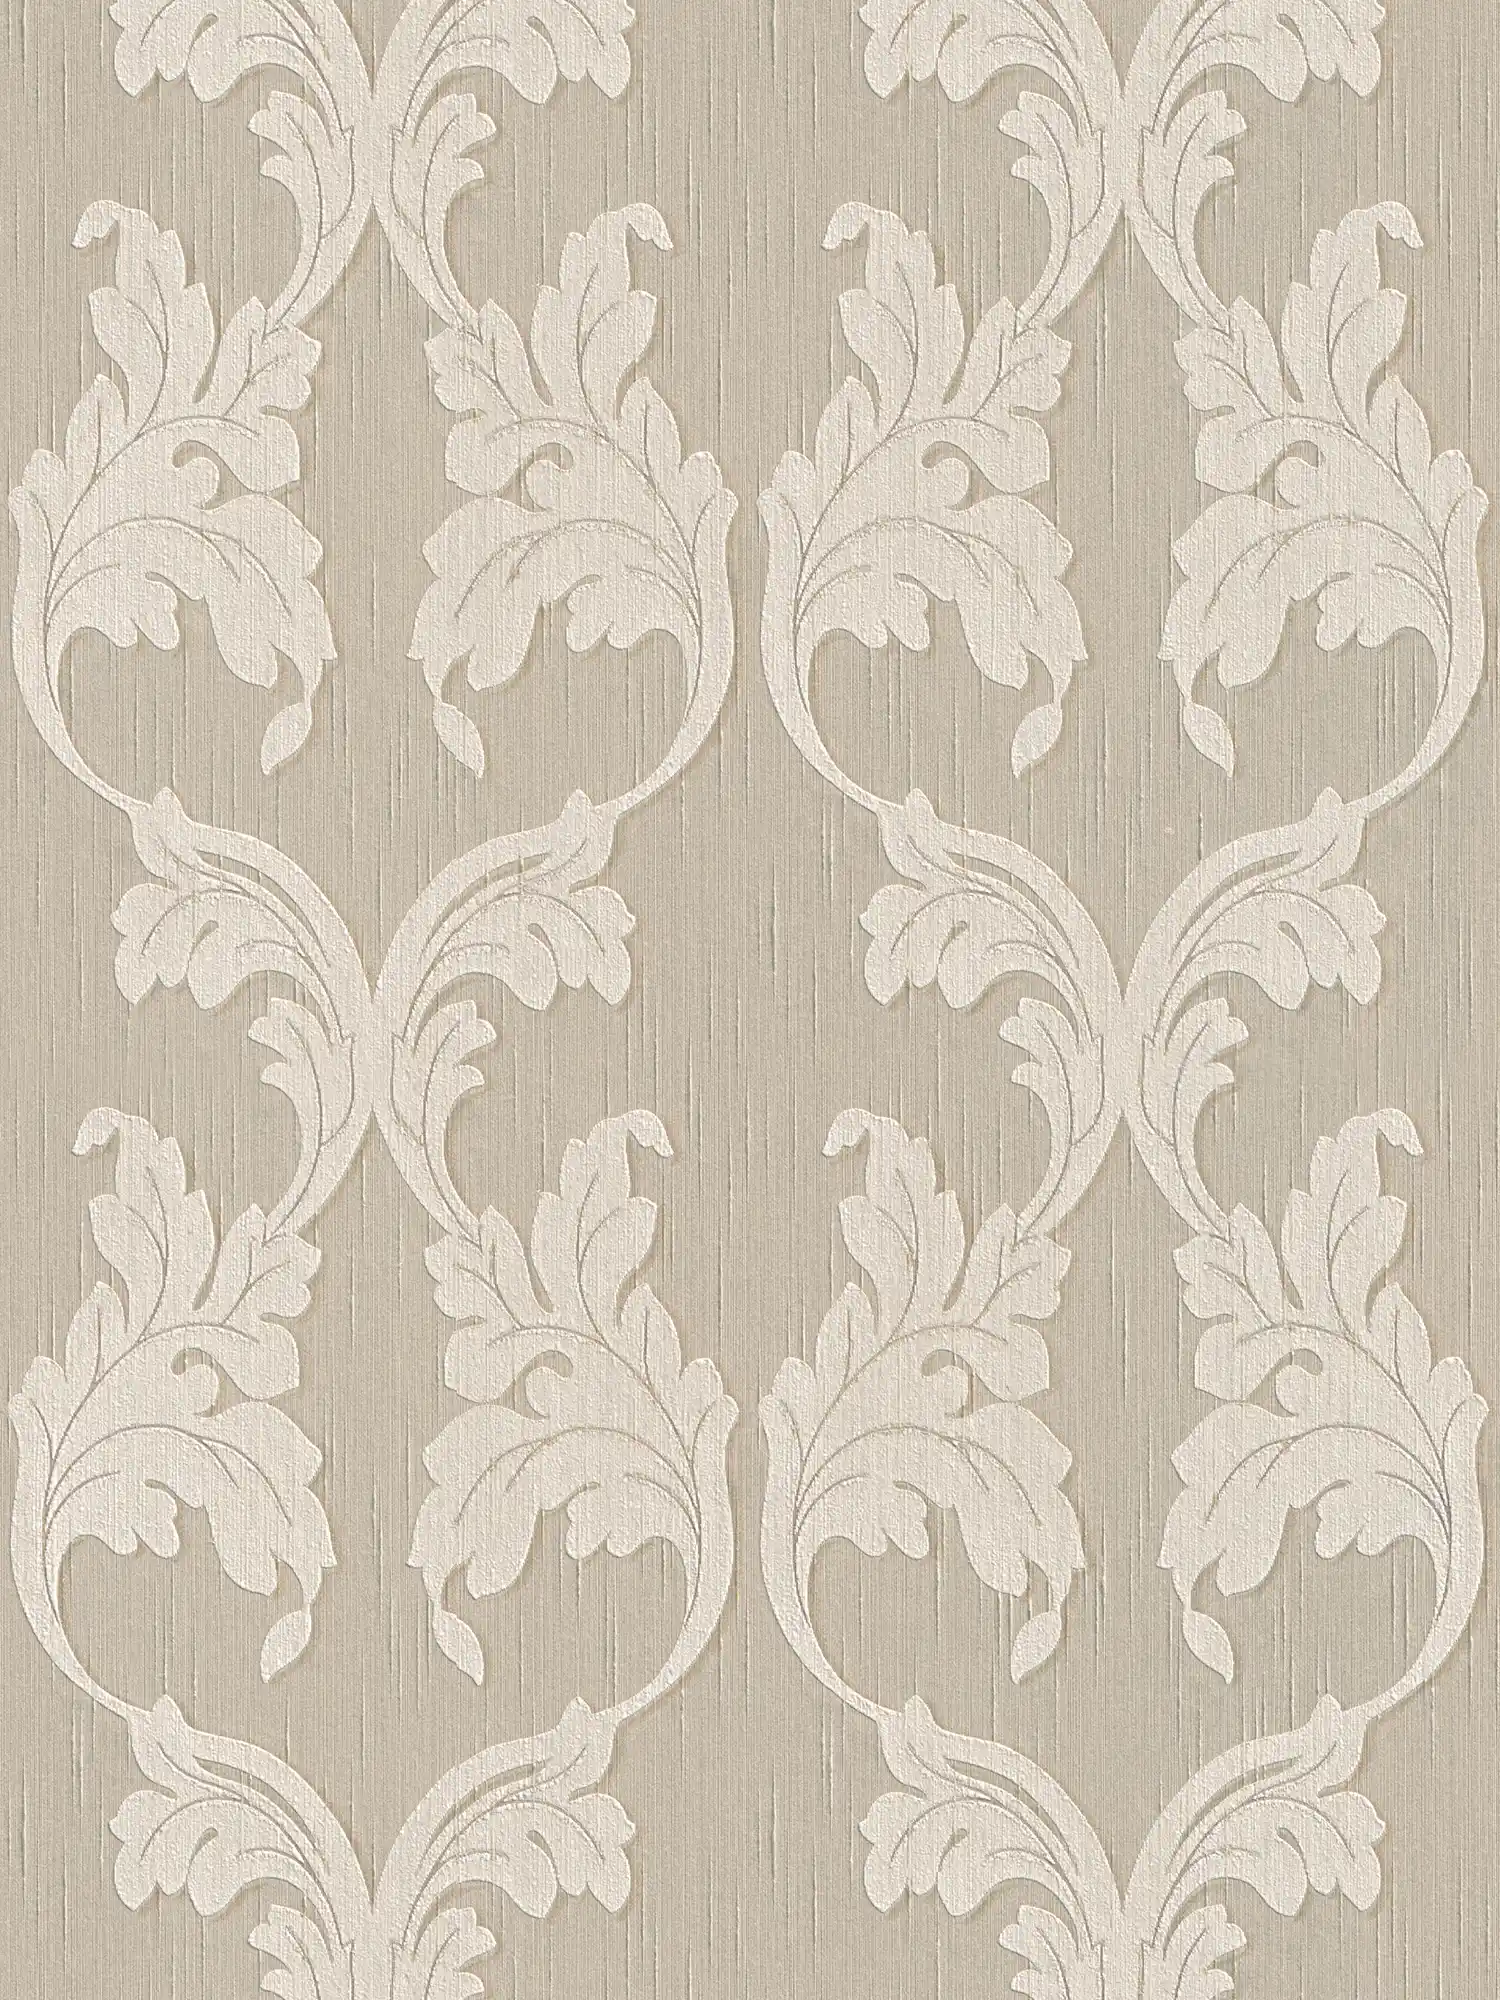 Papel pintado textil de alta calidad con vides ornamentales - beige, crema
